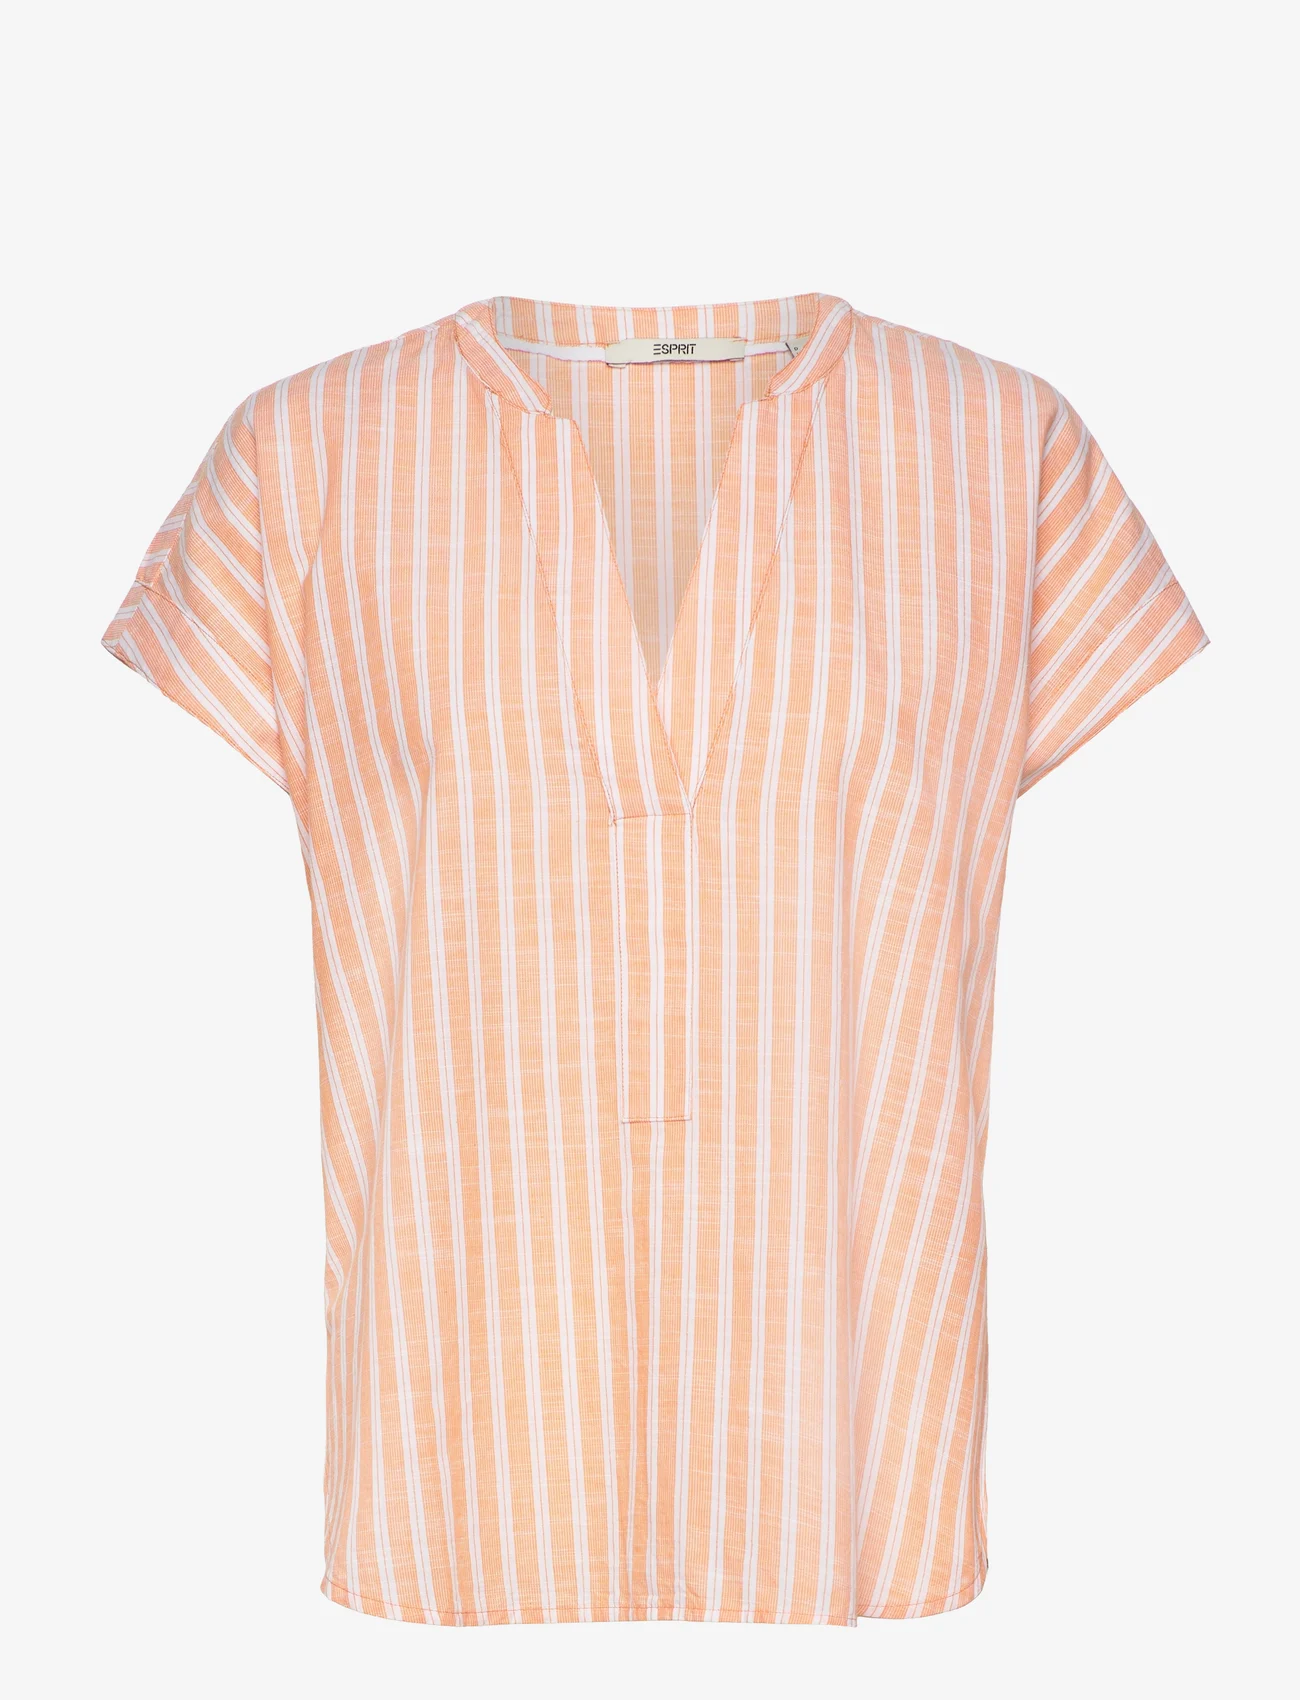 Esprit Casual - Striped cotton blouse - blouses korte mouwen - orange 3 - 0